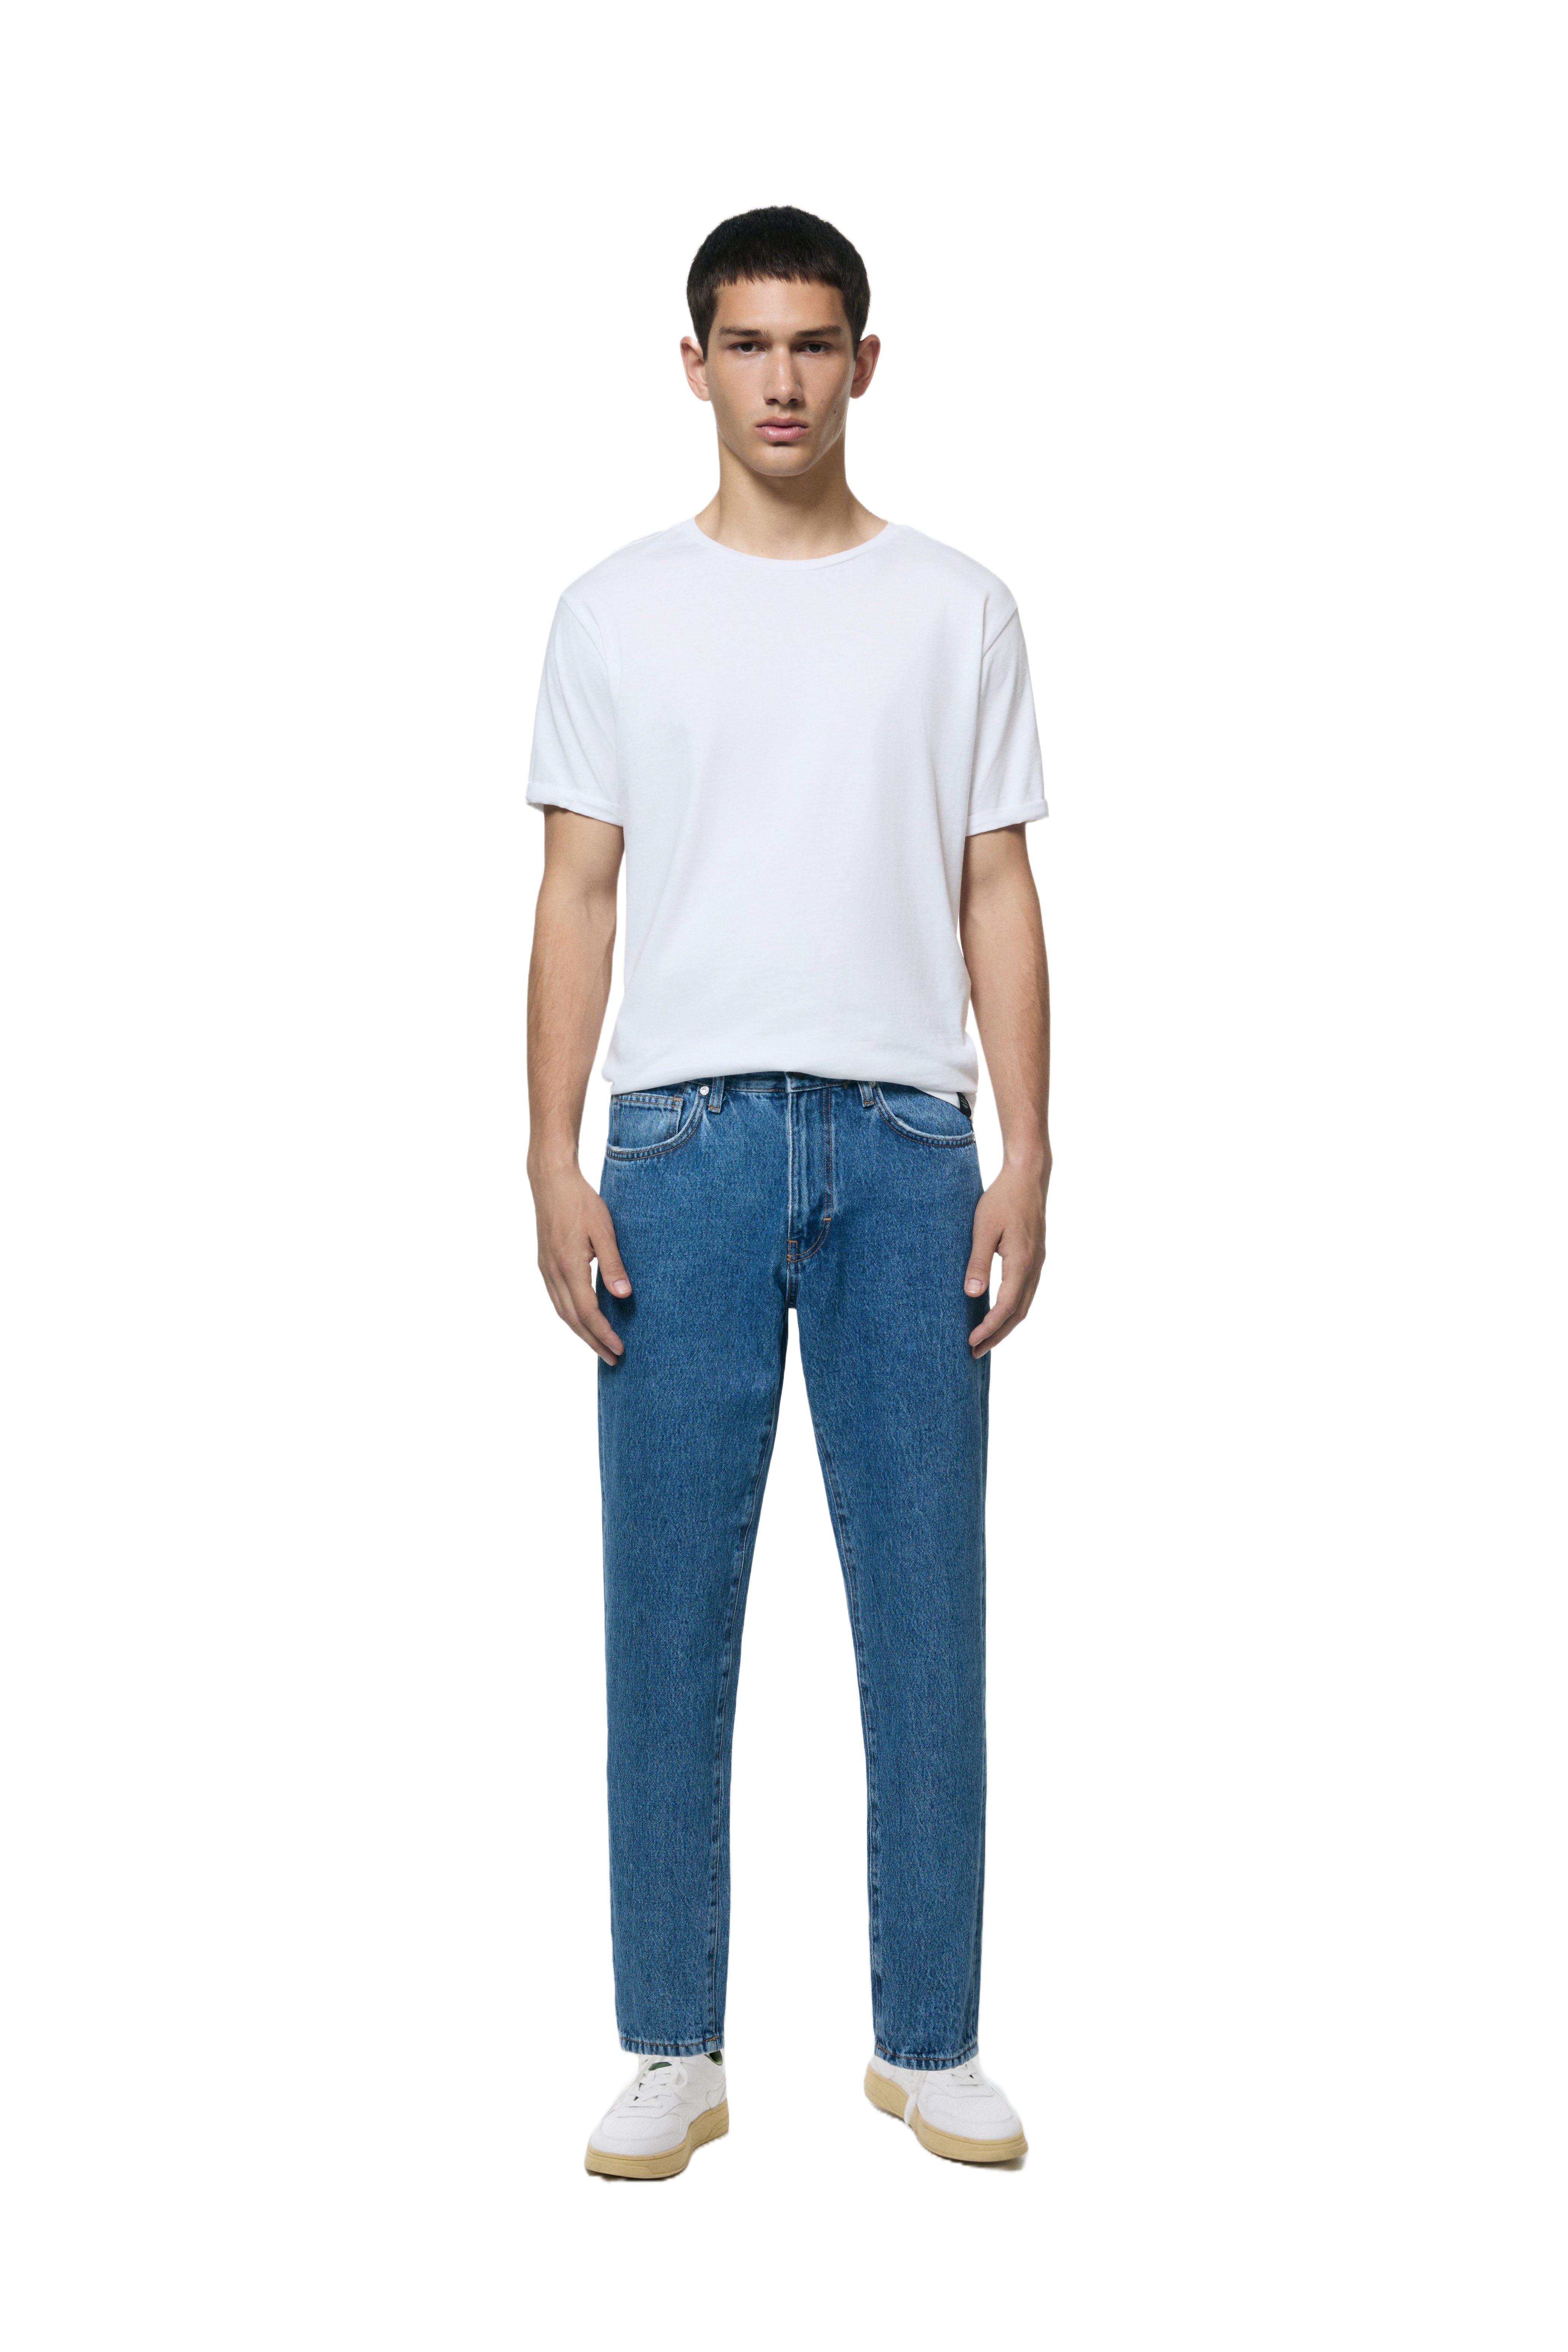 Pull And Bear Denim Blue Jeans, European Size 38 | eBay